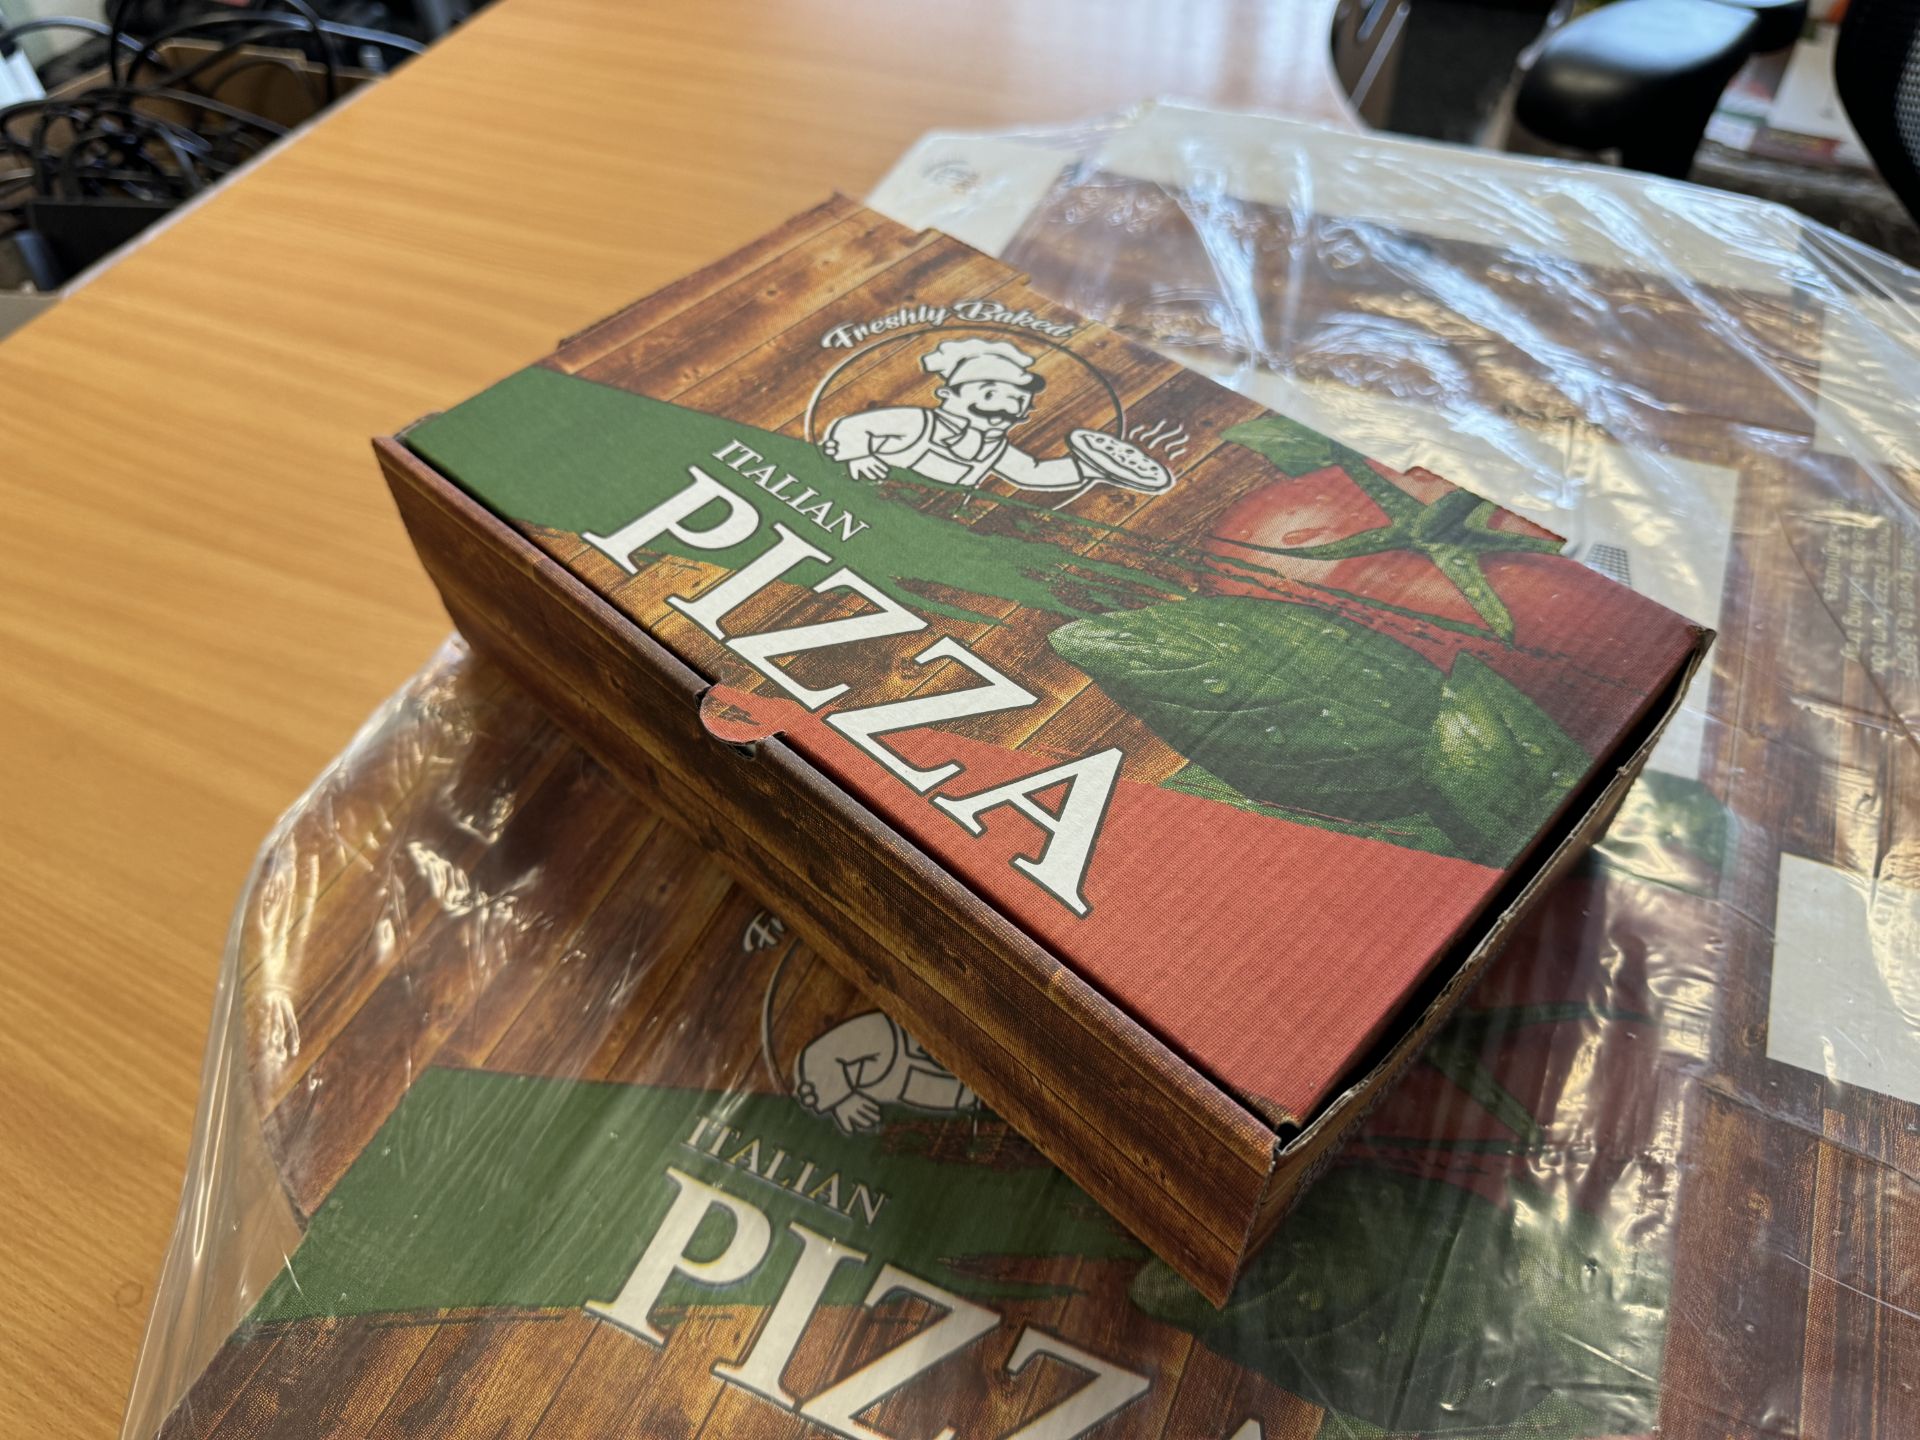 Circa 900 - Italian Pizza Calzone Boxes (Cardboard) - Multiple Uses RRP £130 - Bild 3 aus 12